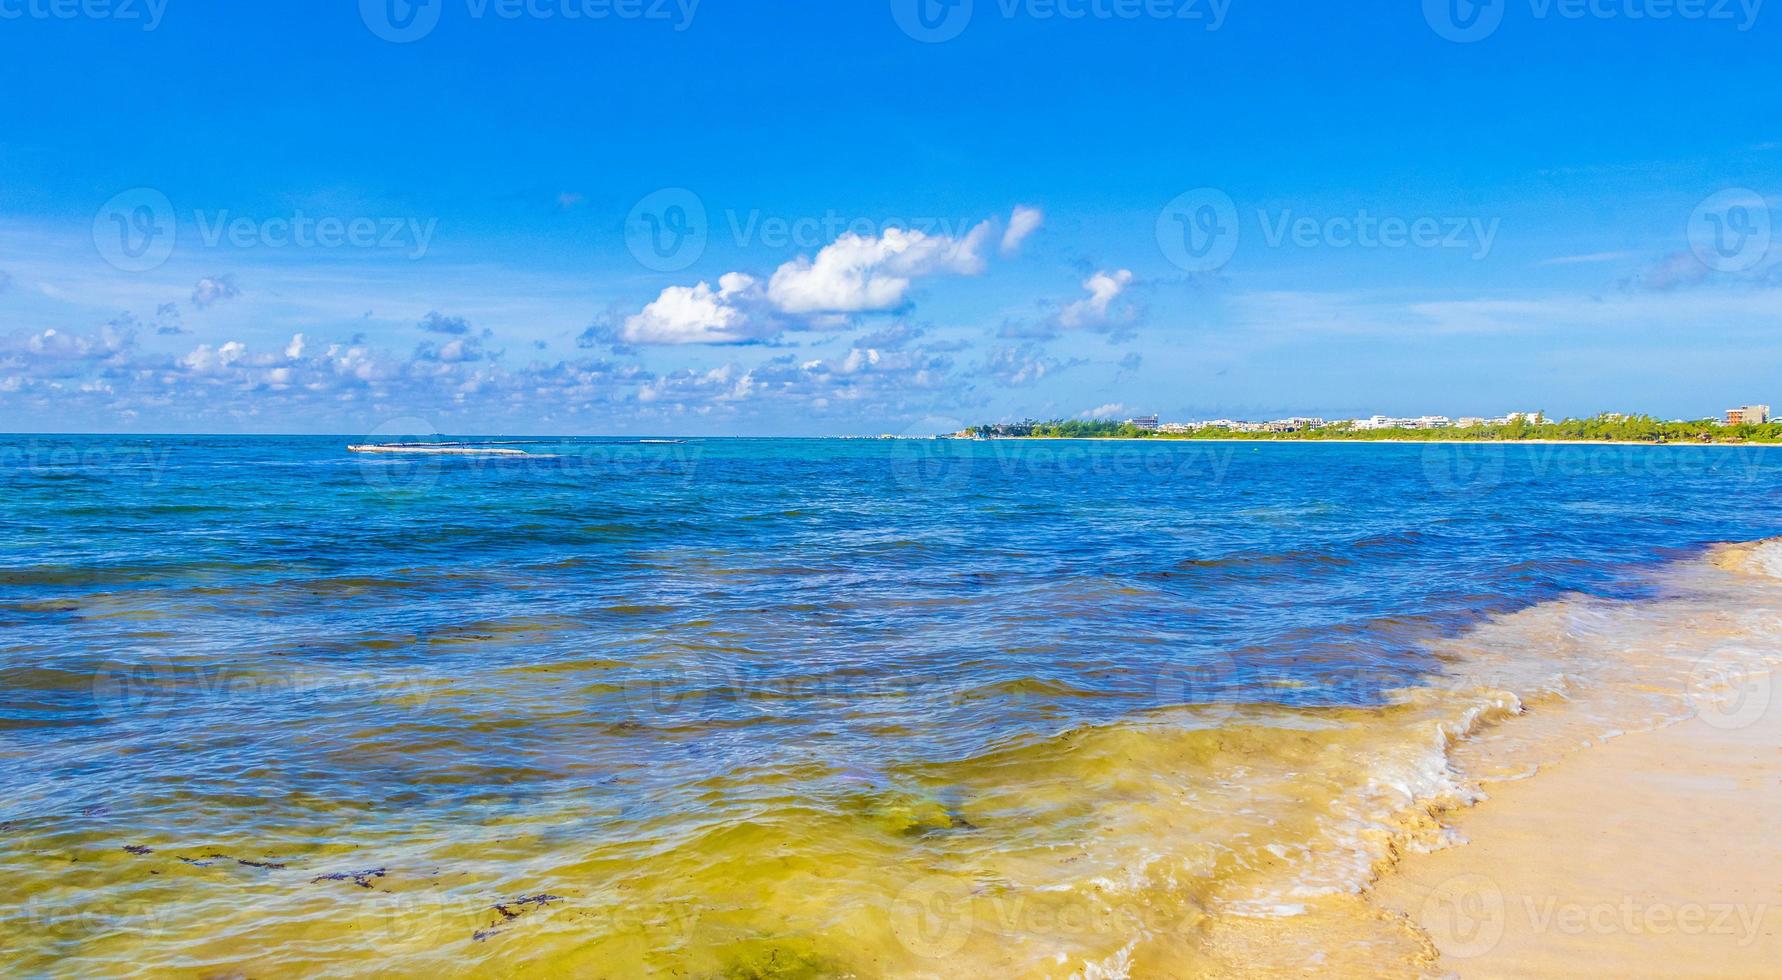 increíble playa tropical y mar caribeño agua turquesa clara méxico. foto